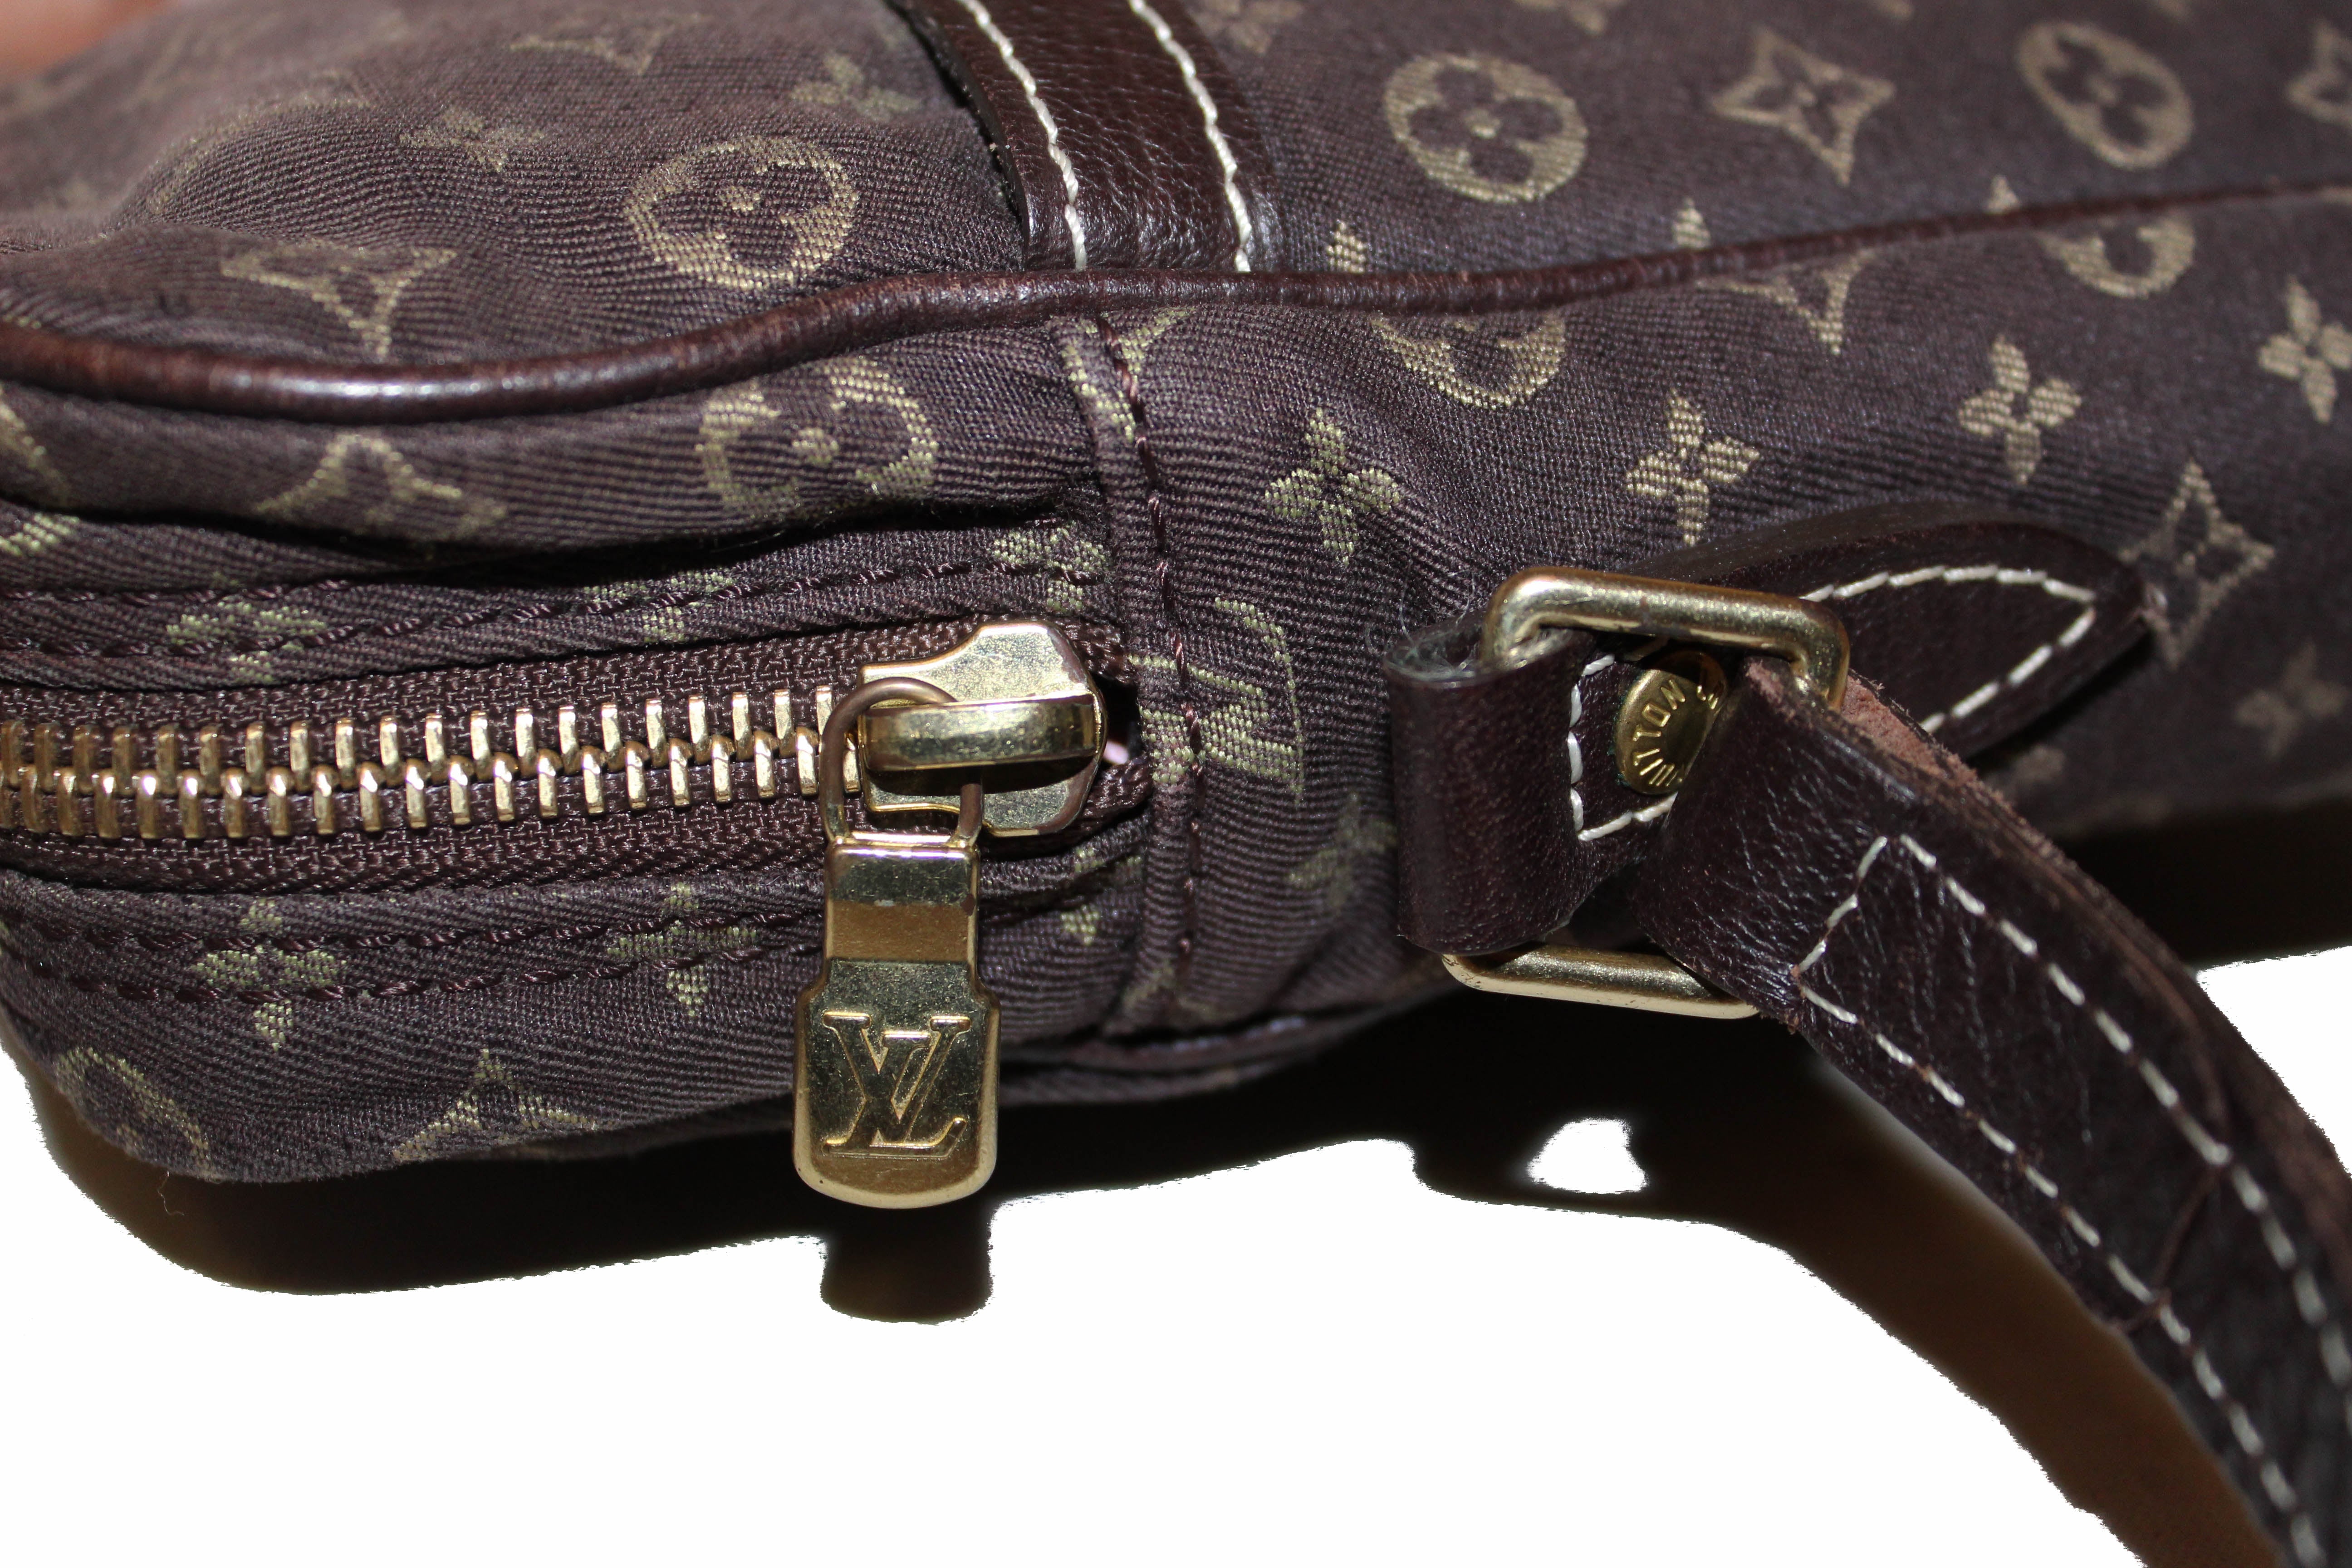 Louis Vuitton Camera Mini Pm Small Lv Shoulder Travel Brown